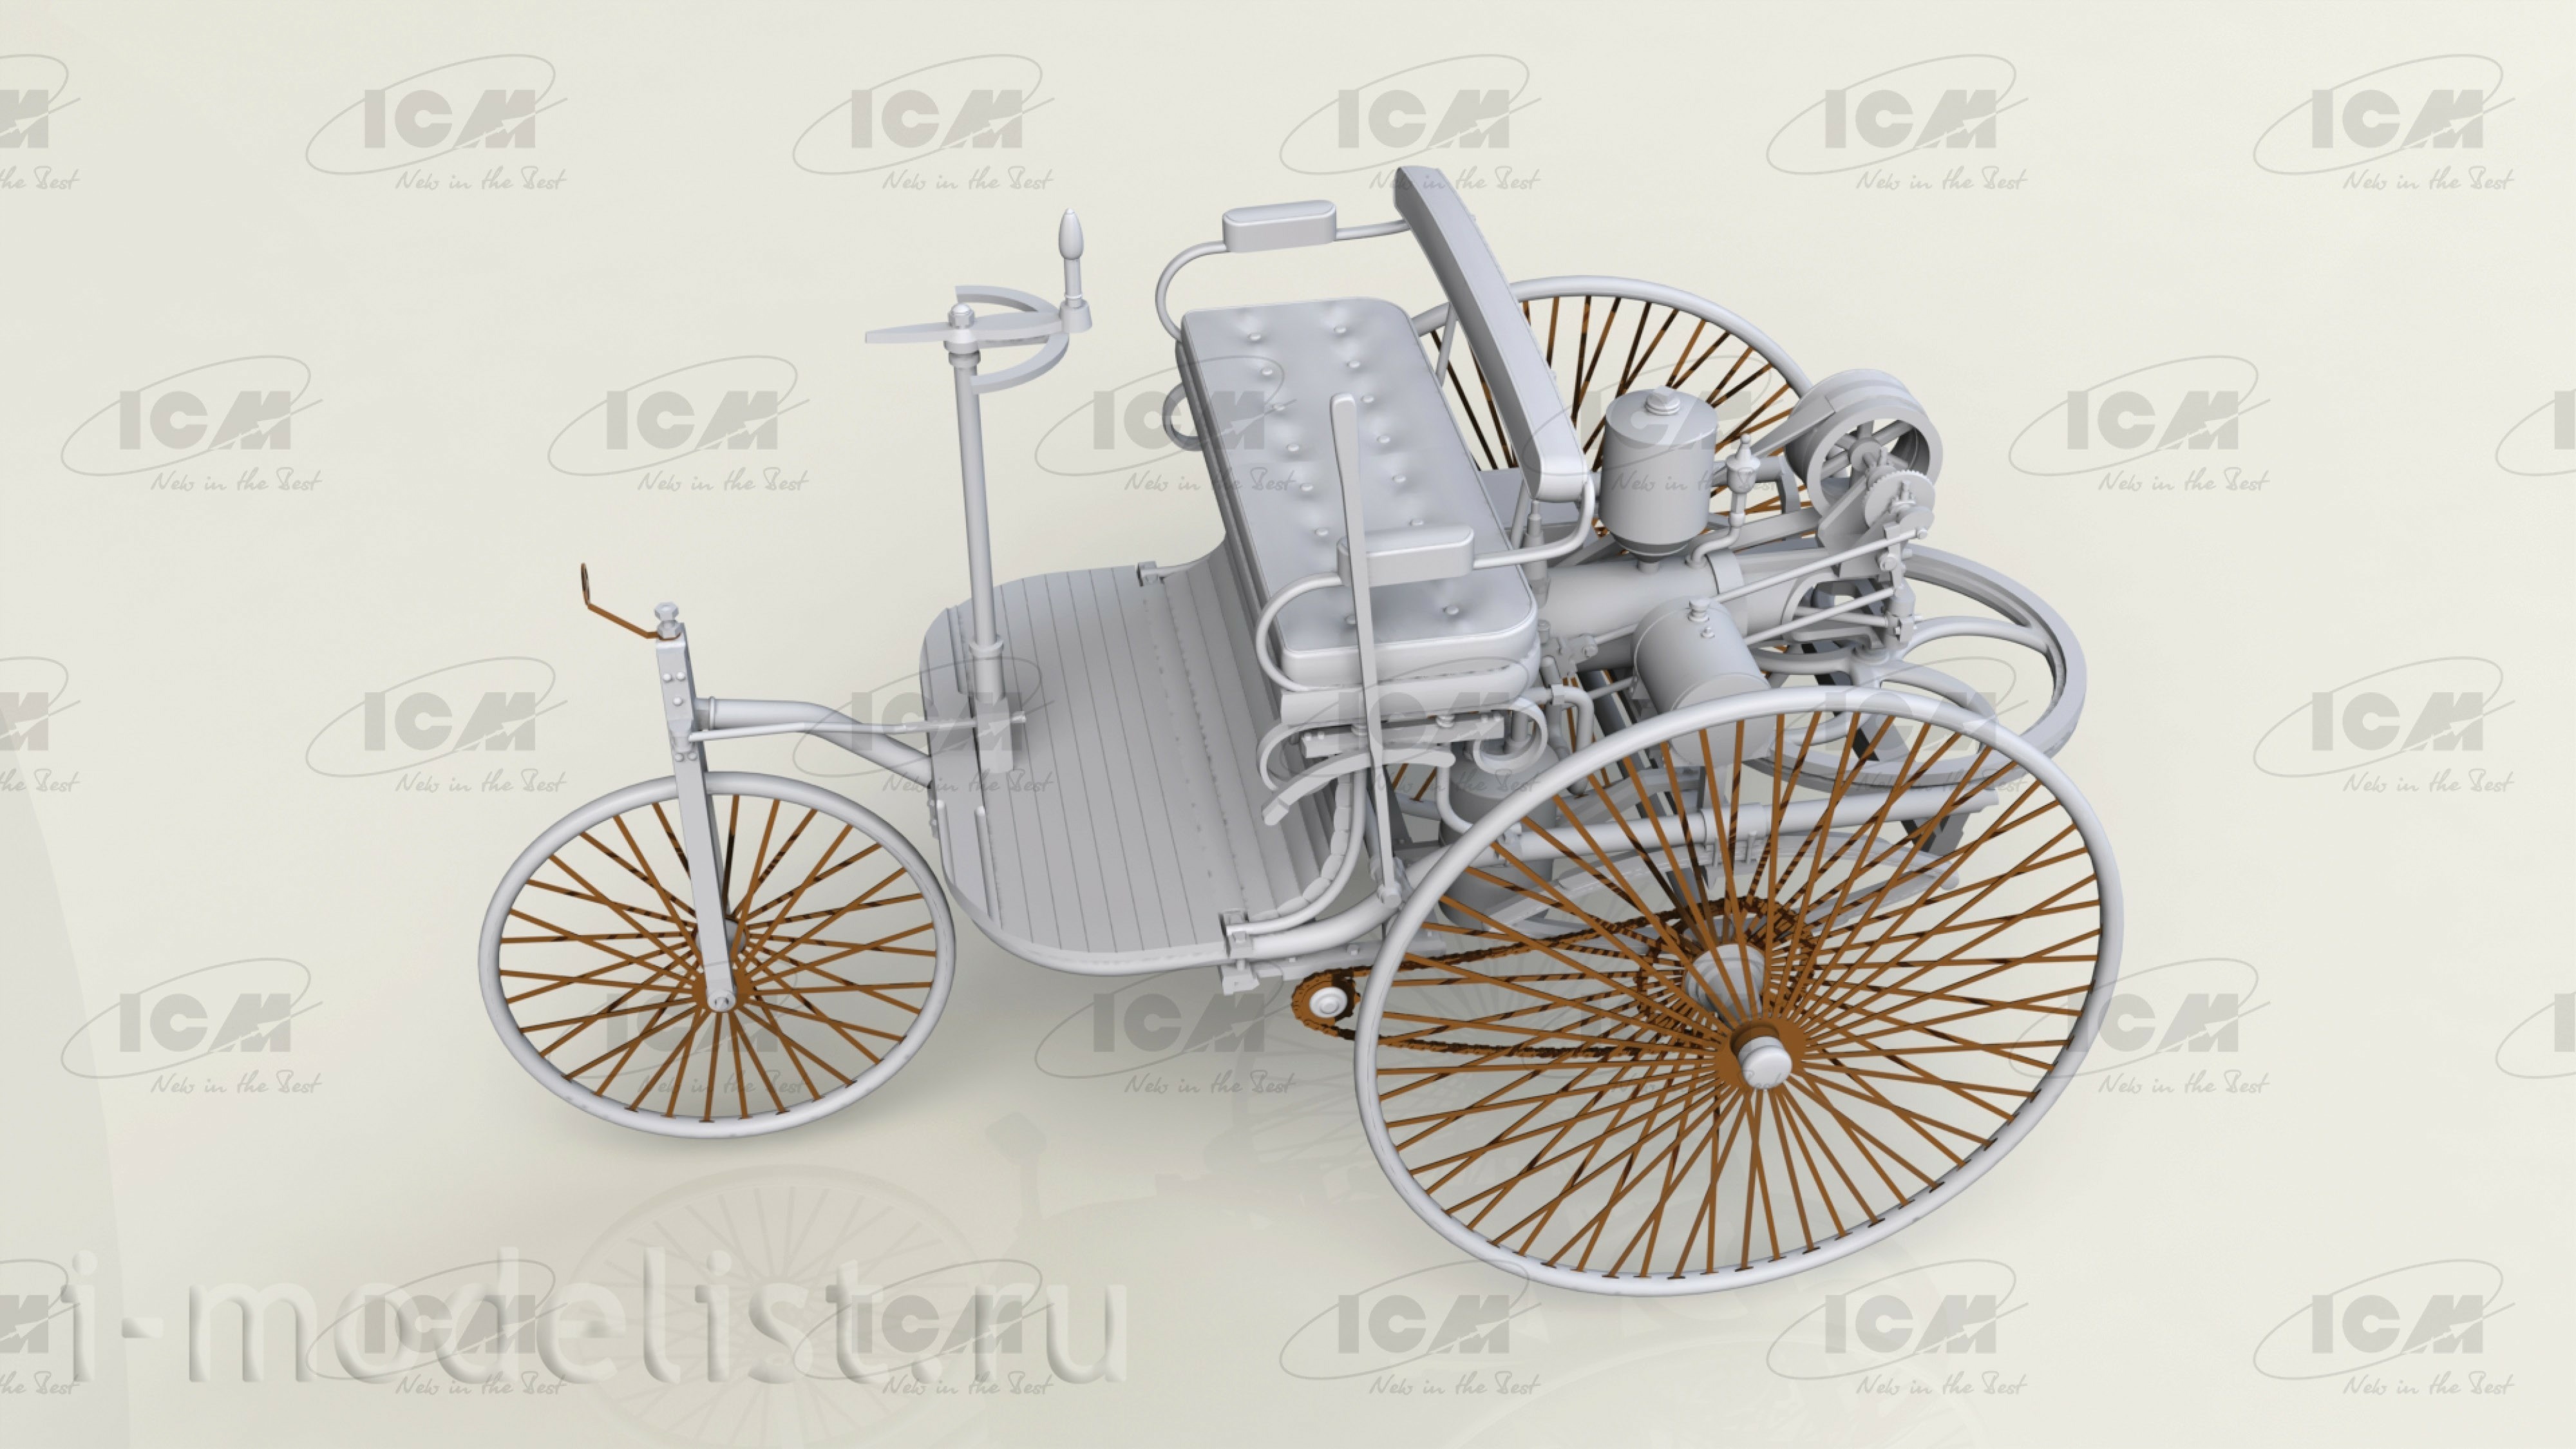 24040 ICM 1/24 Автомобиль Бенца 1886г.